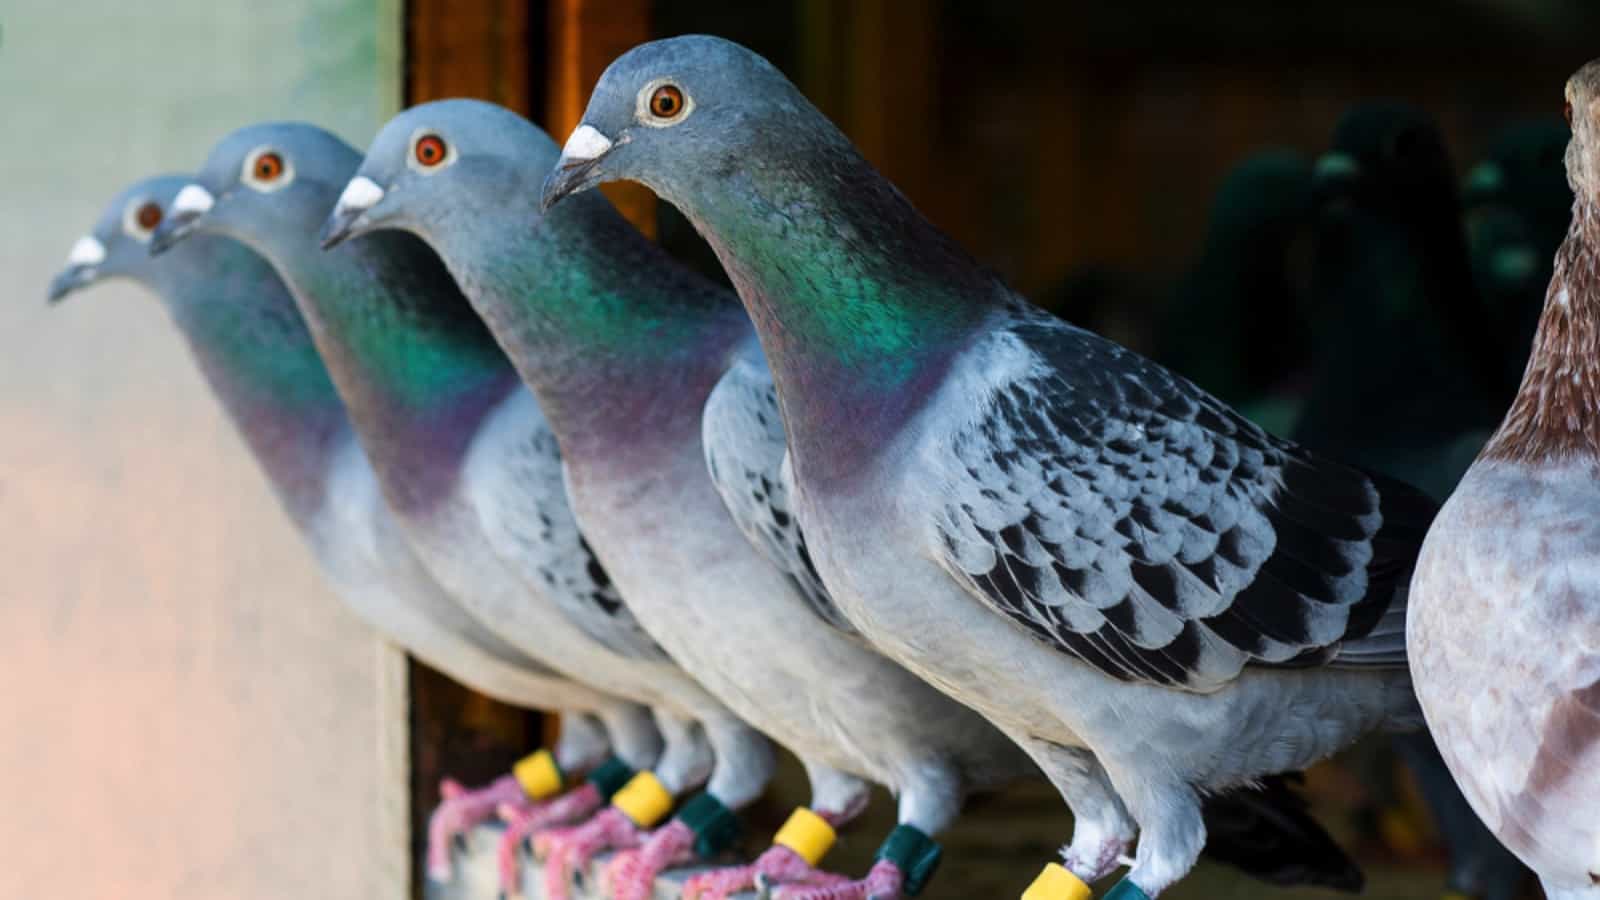 Homing pigeon in home loft